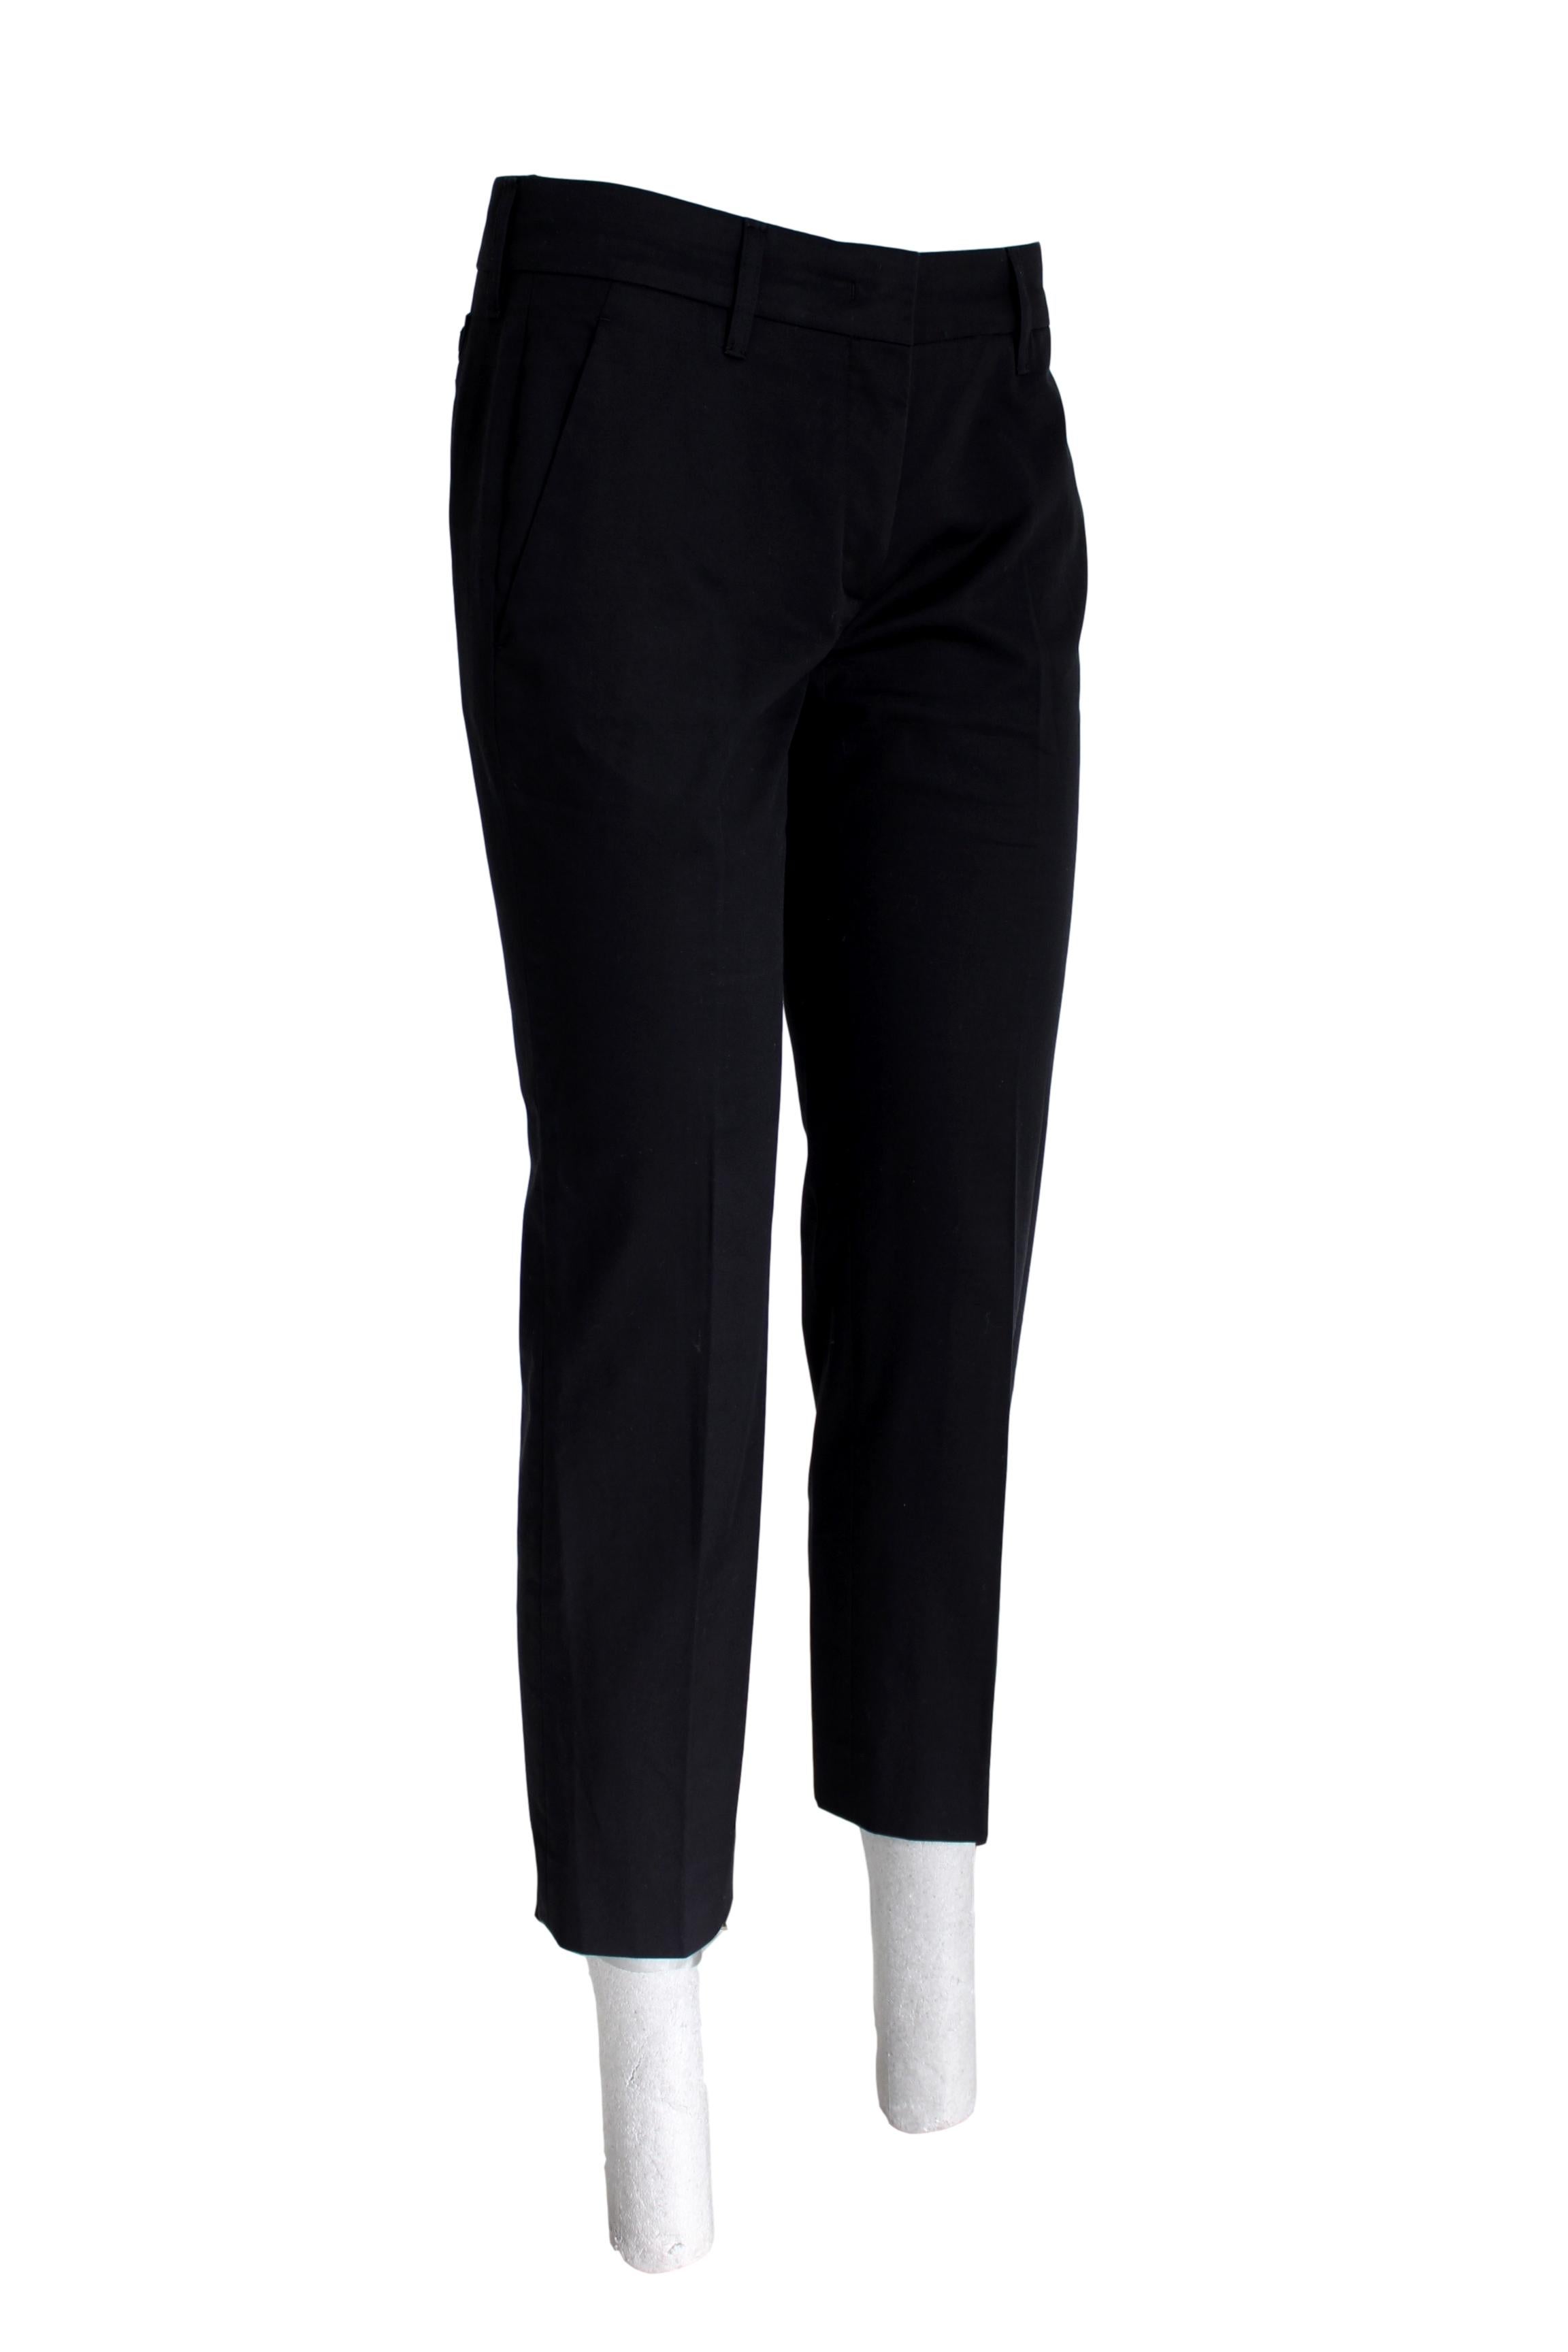 Women's Prada Black Cotton Short Capri Classic Trousers